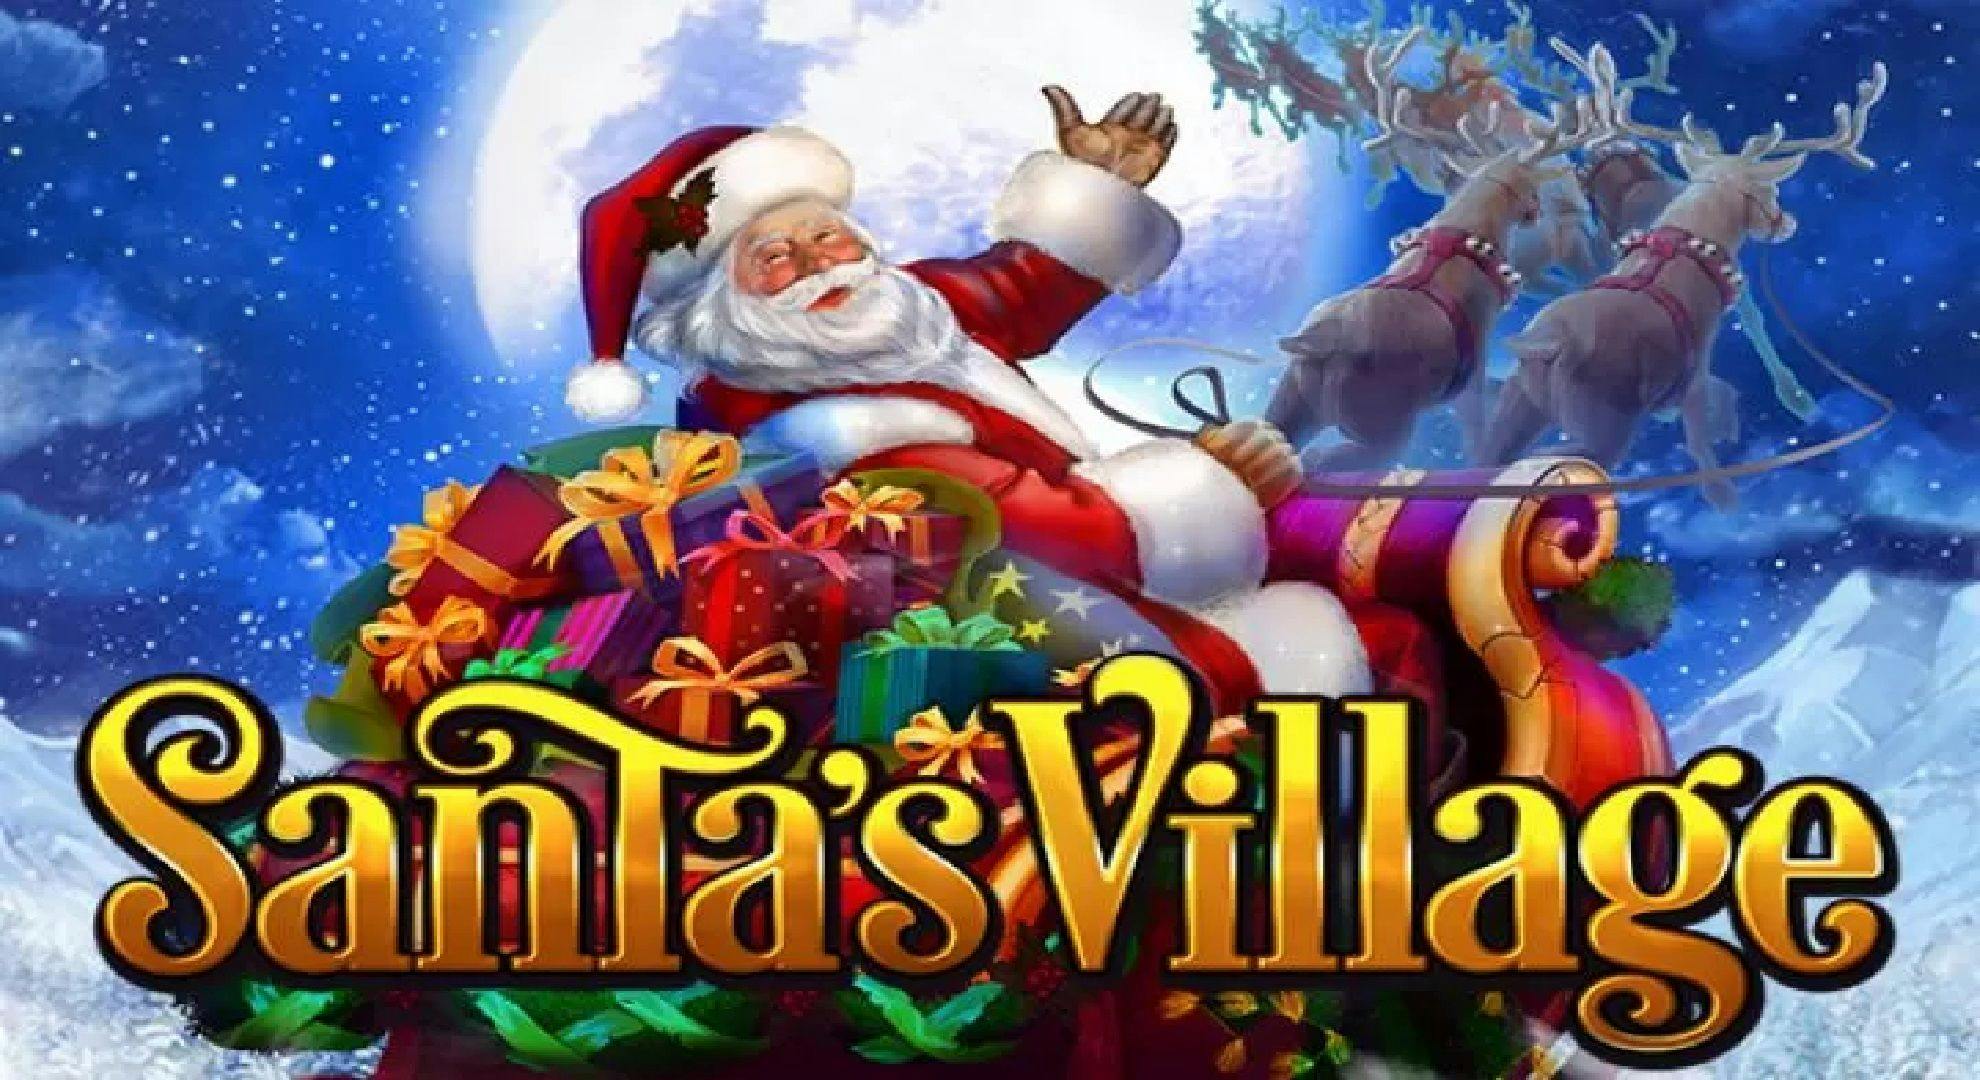 Santa's Village Slot Online Free Play